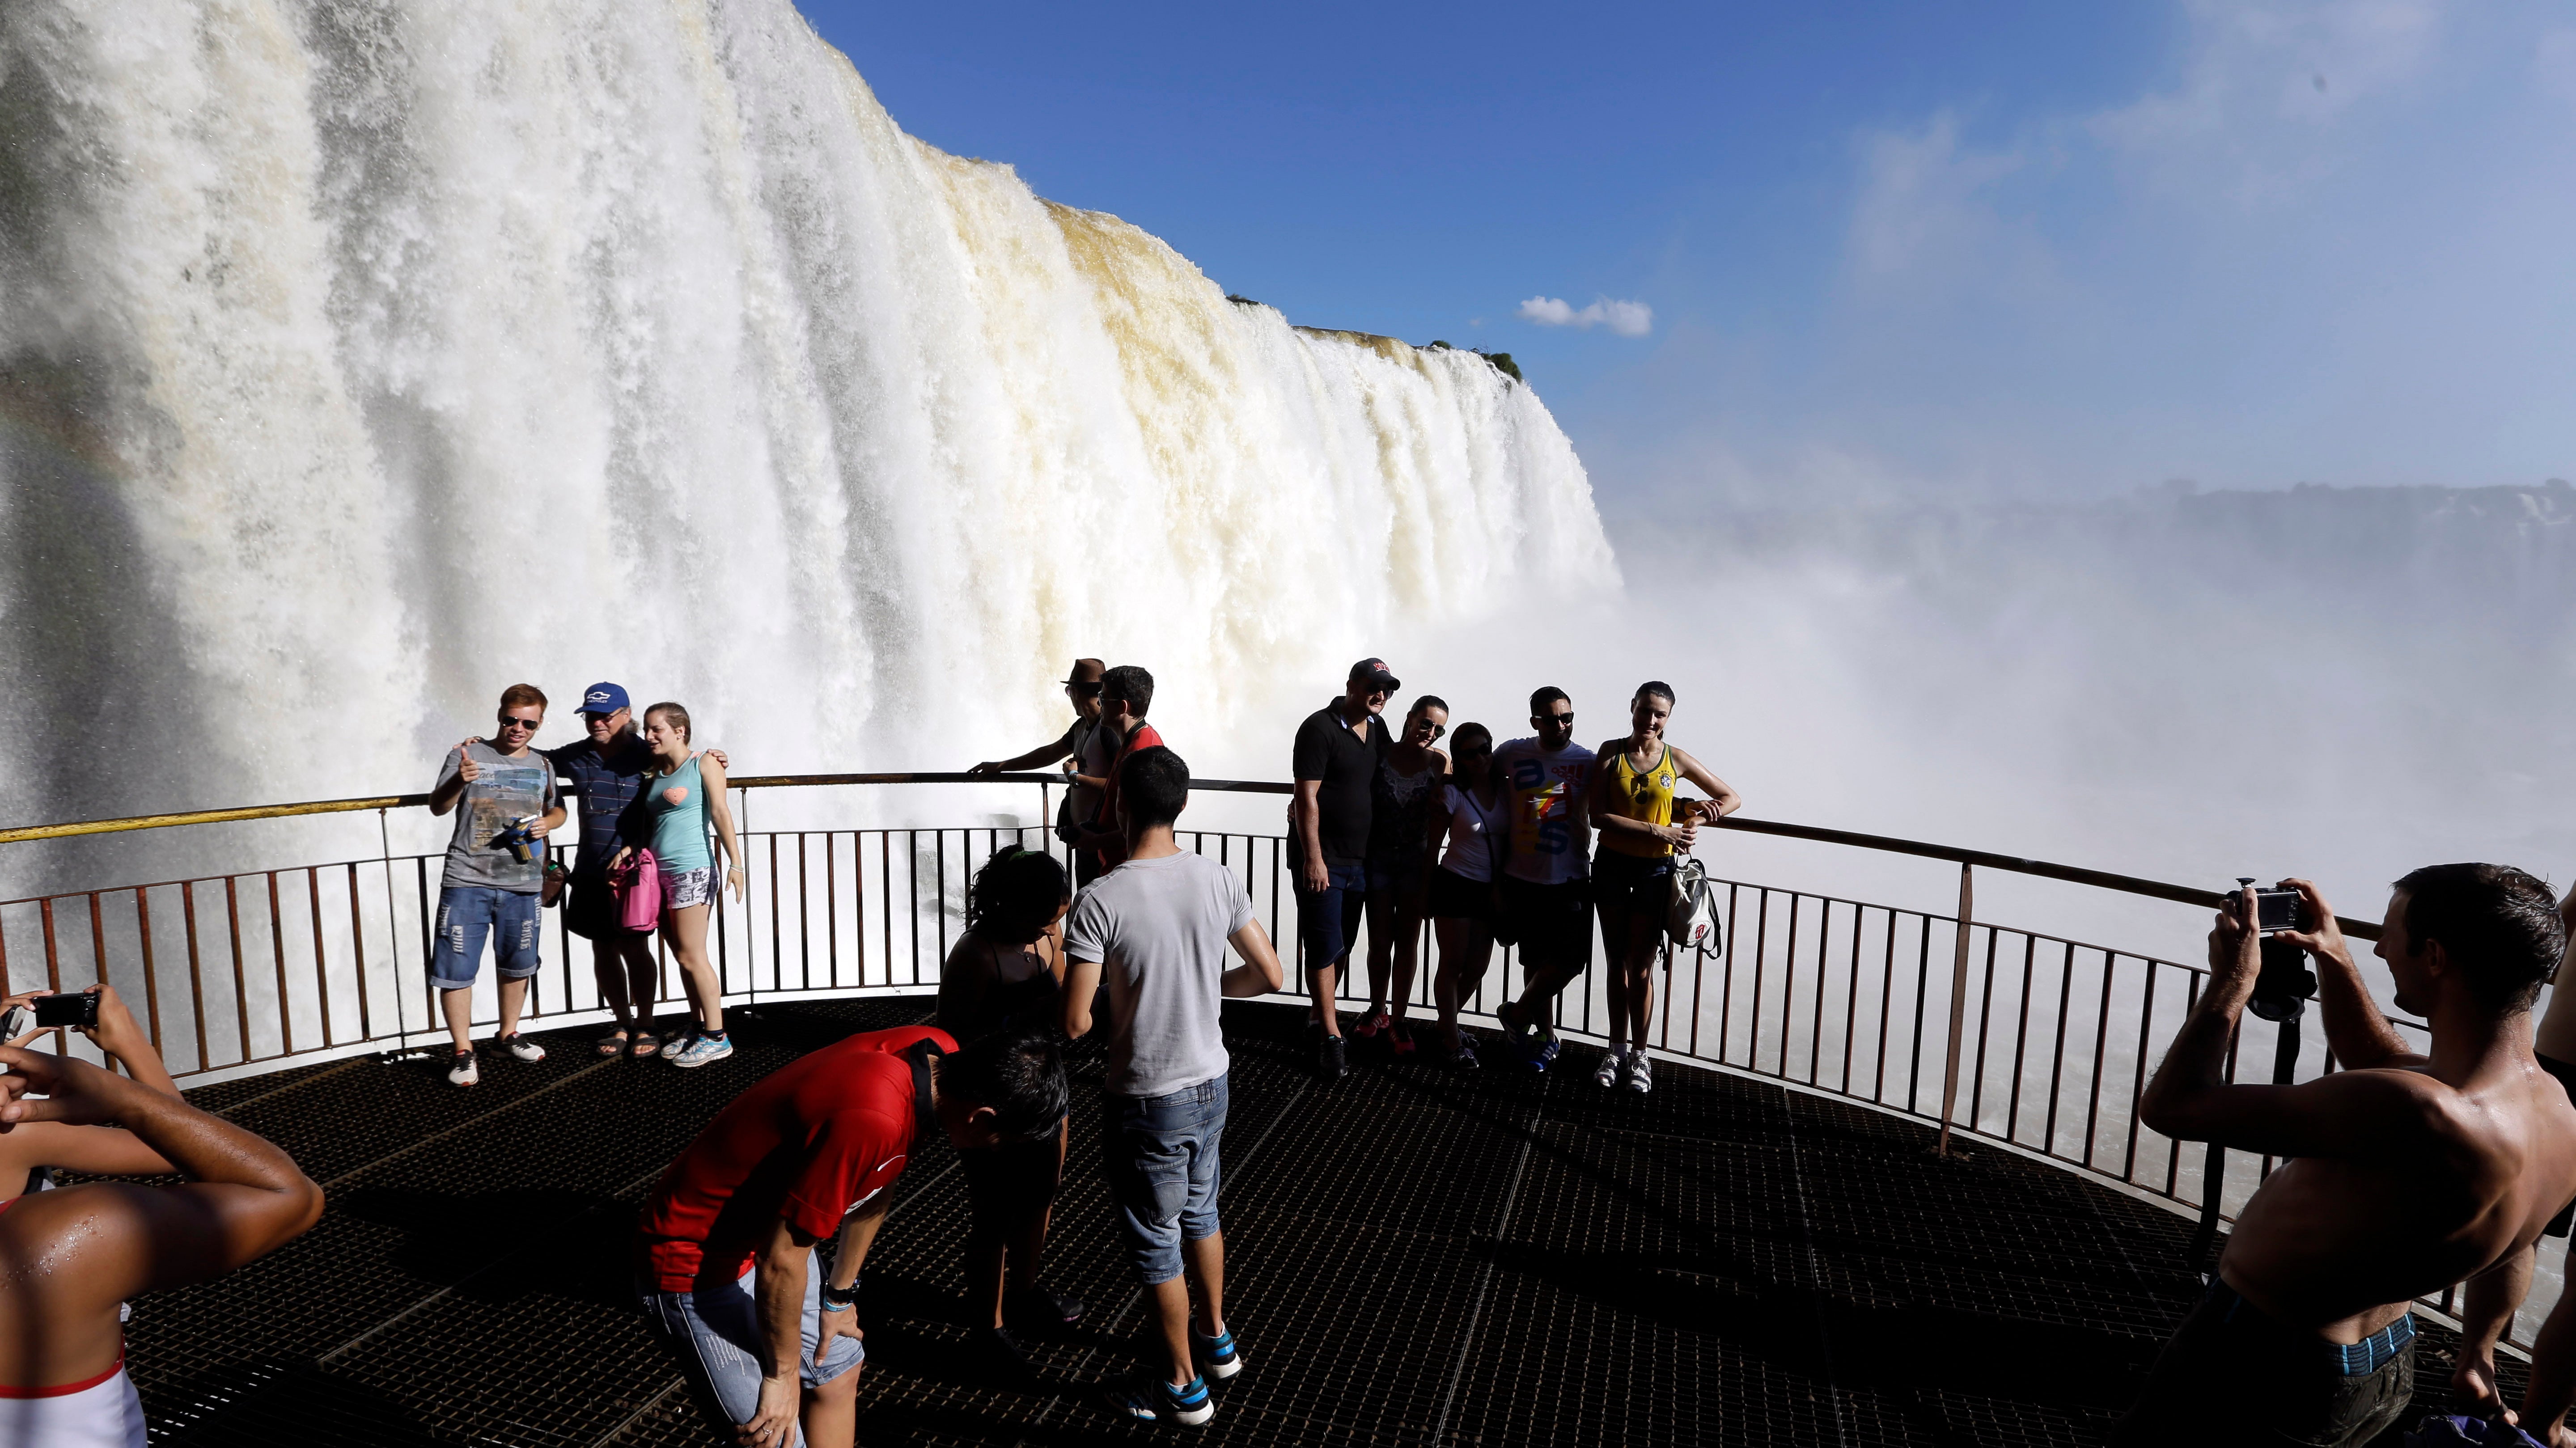 Tourists enjoy South America’s Iguazu Falls